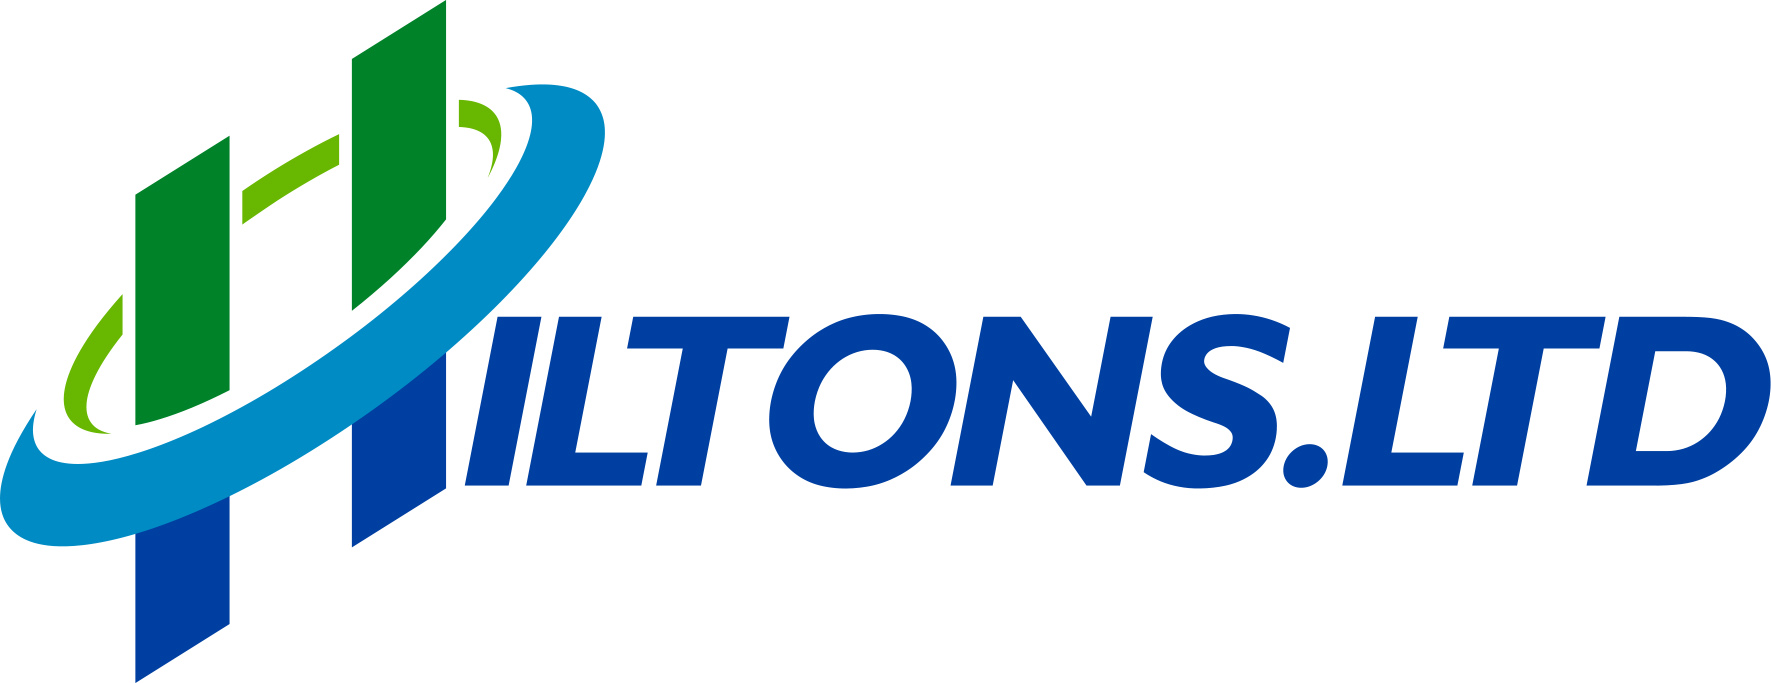 Hiltons Distribution Ltd